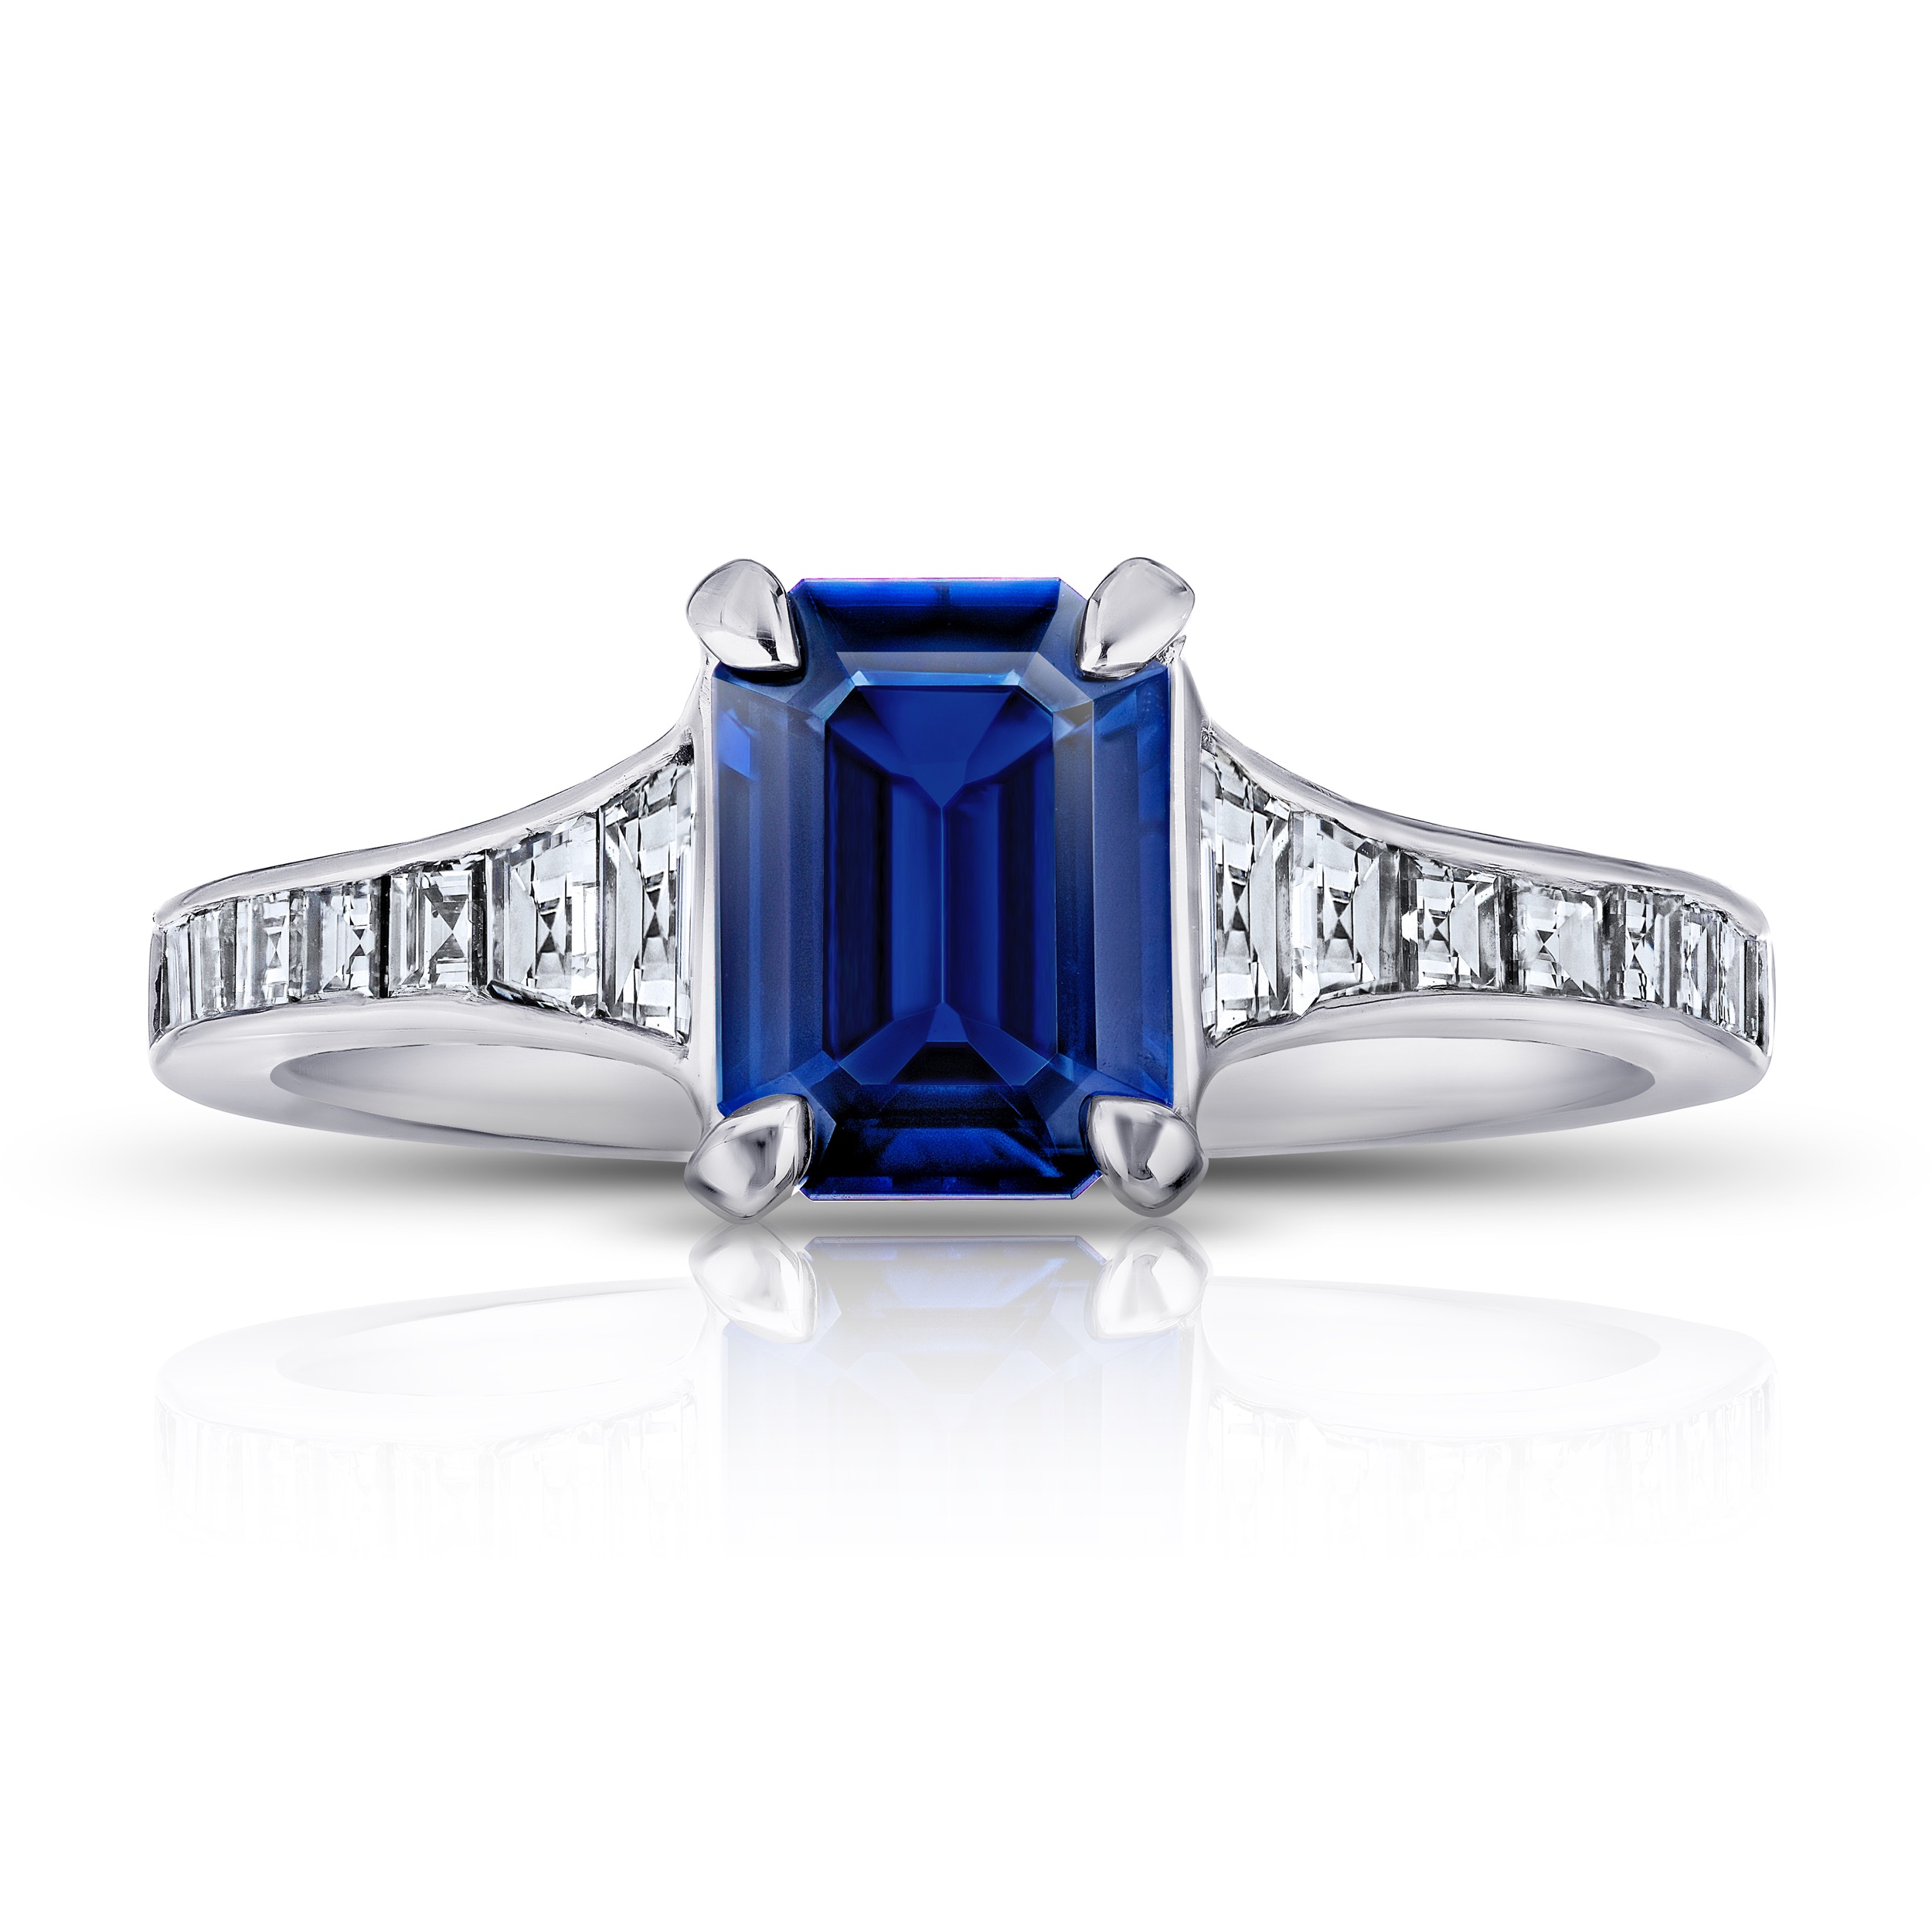 1.41 Carat Emerald Cut Blue Sapphire Ring | Beveli Official eShop